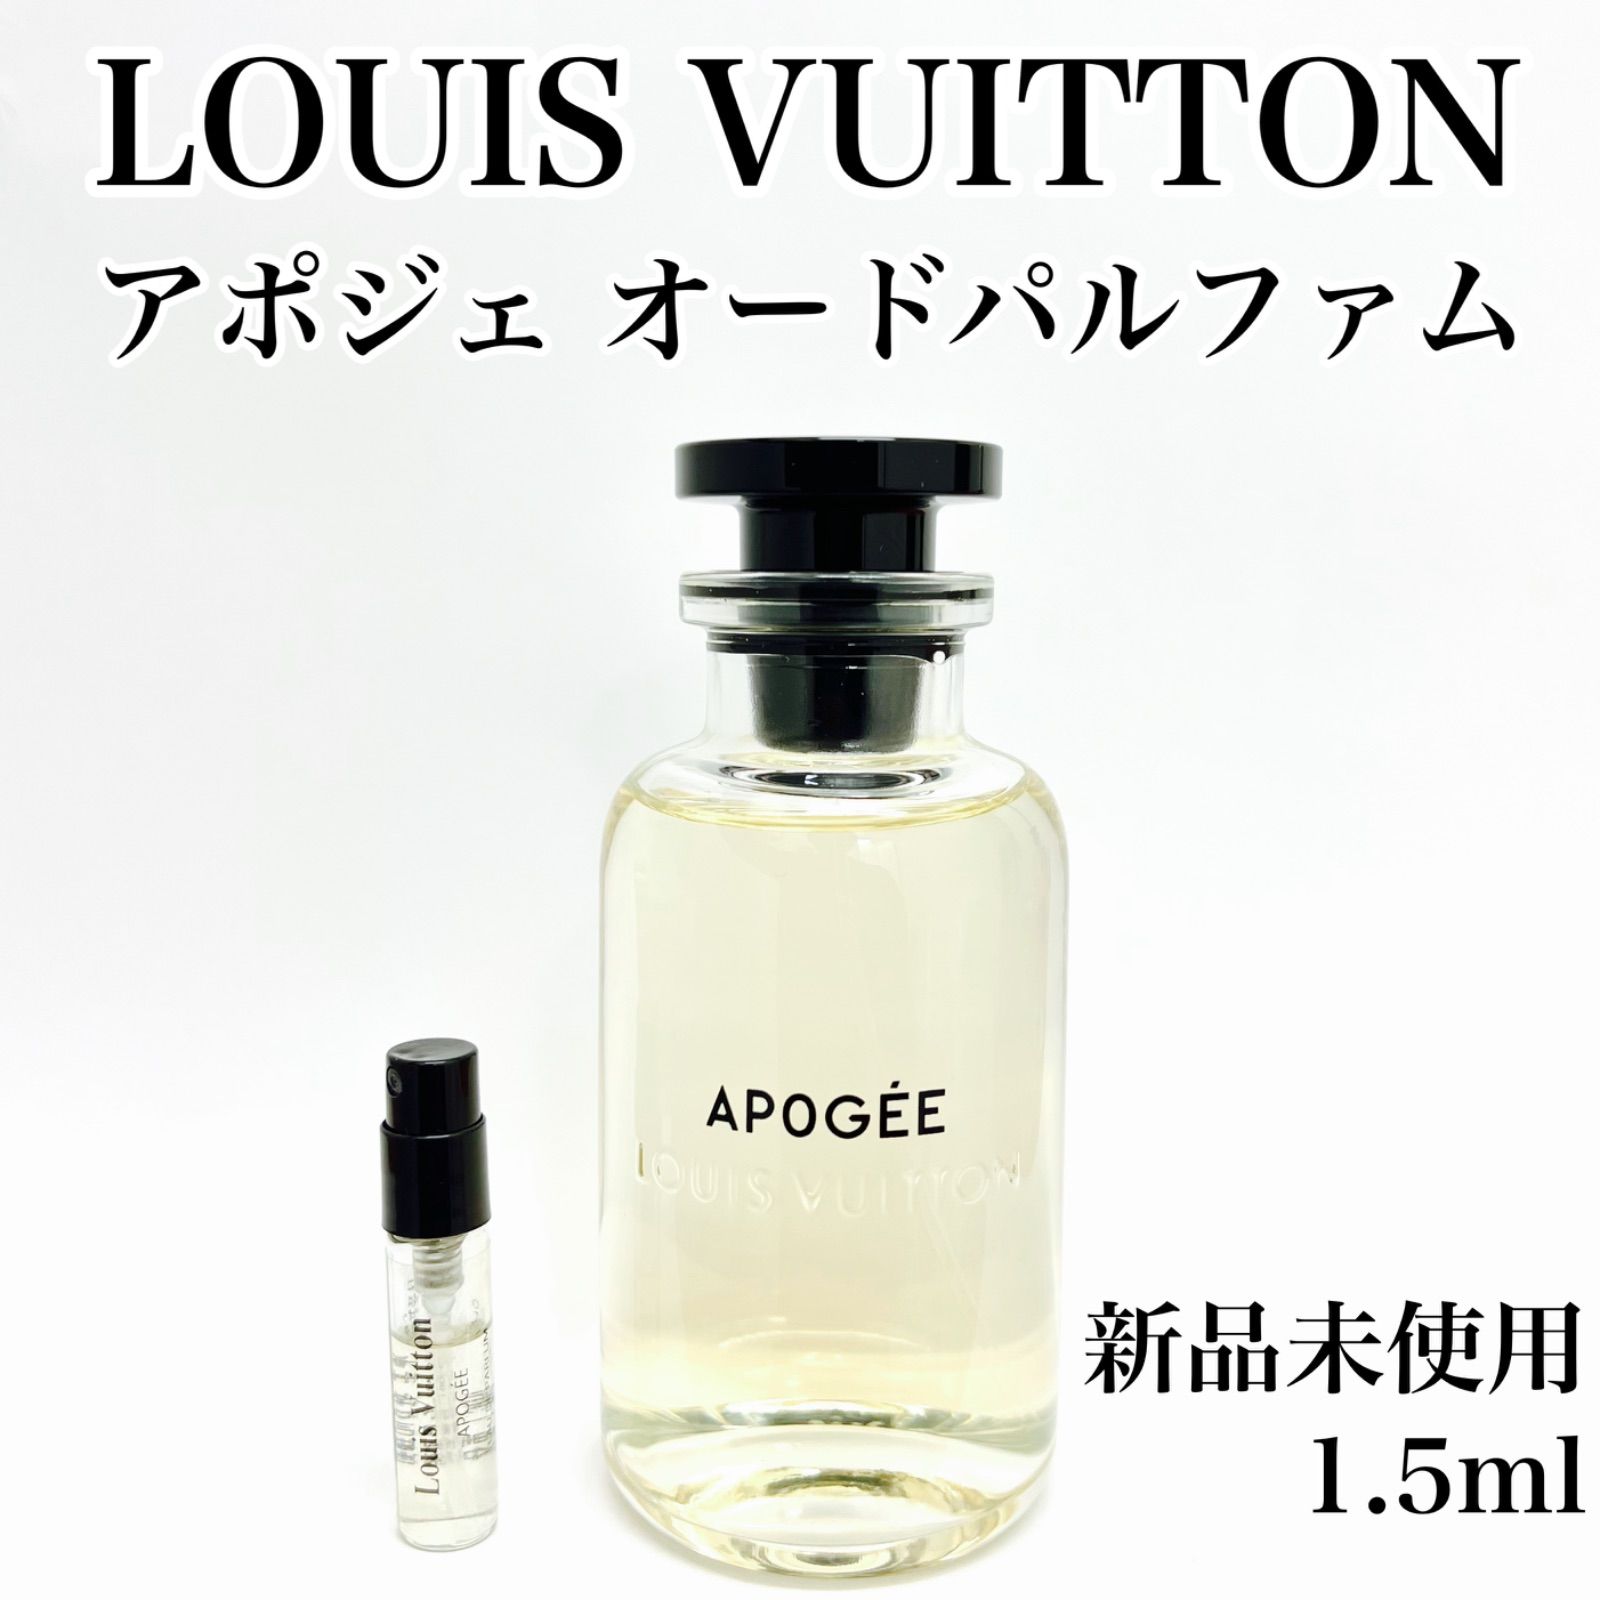 Louis Vuitton ルイヴィトン アポジェ 香水 1.5ml - セット割実施